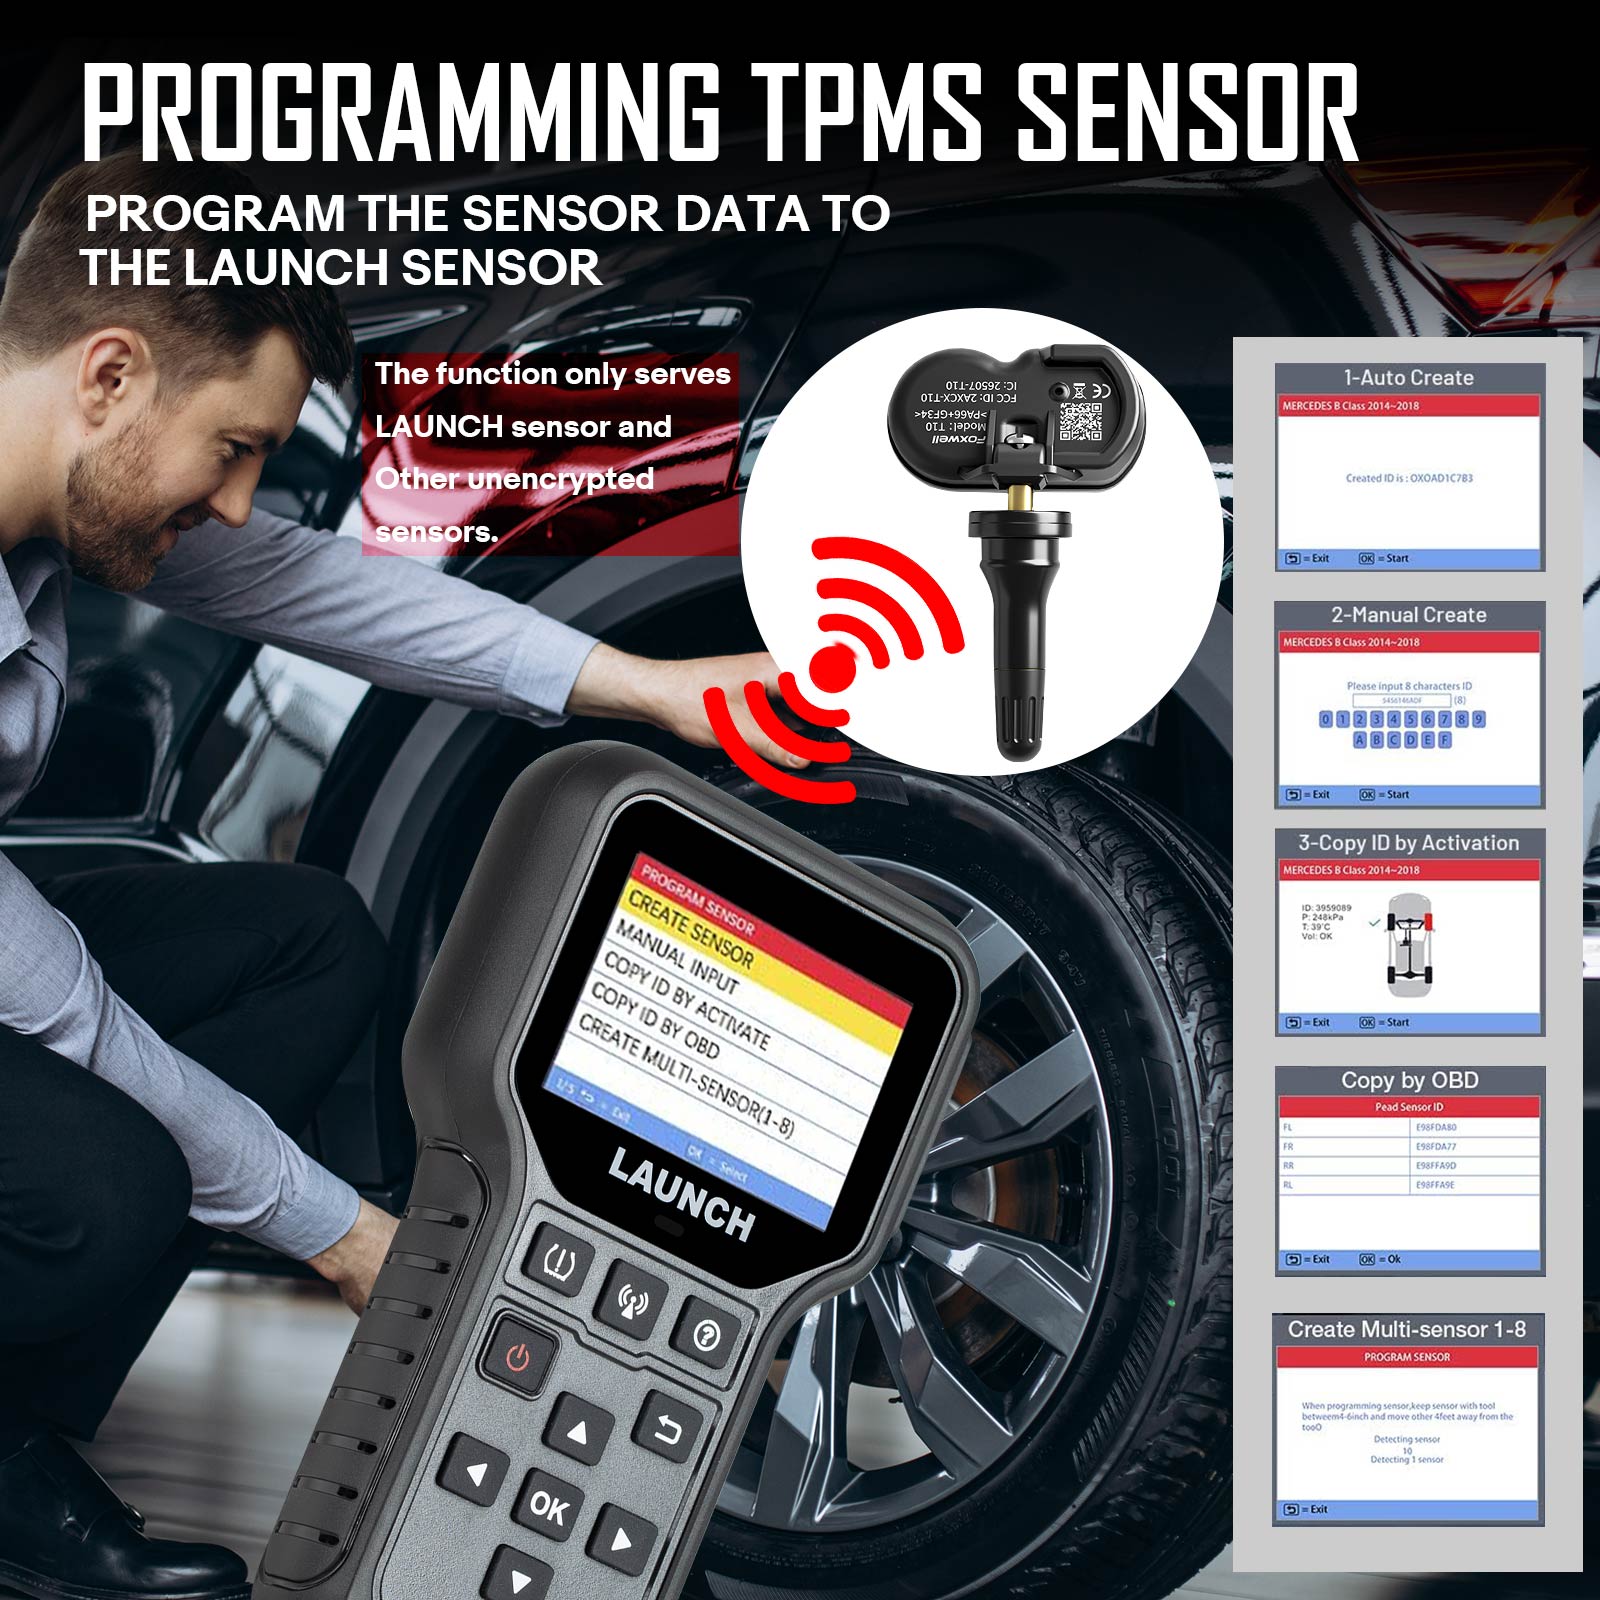 launch crt5011e can program LAUNCH LTR-01 Sensor & Other Unencrypted Sensors